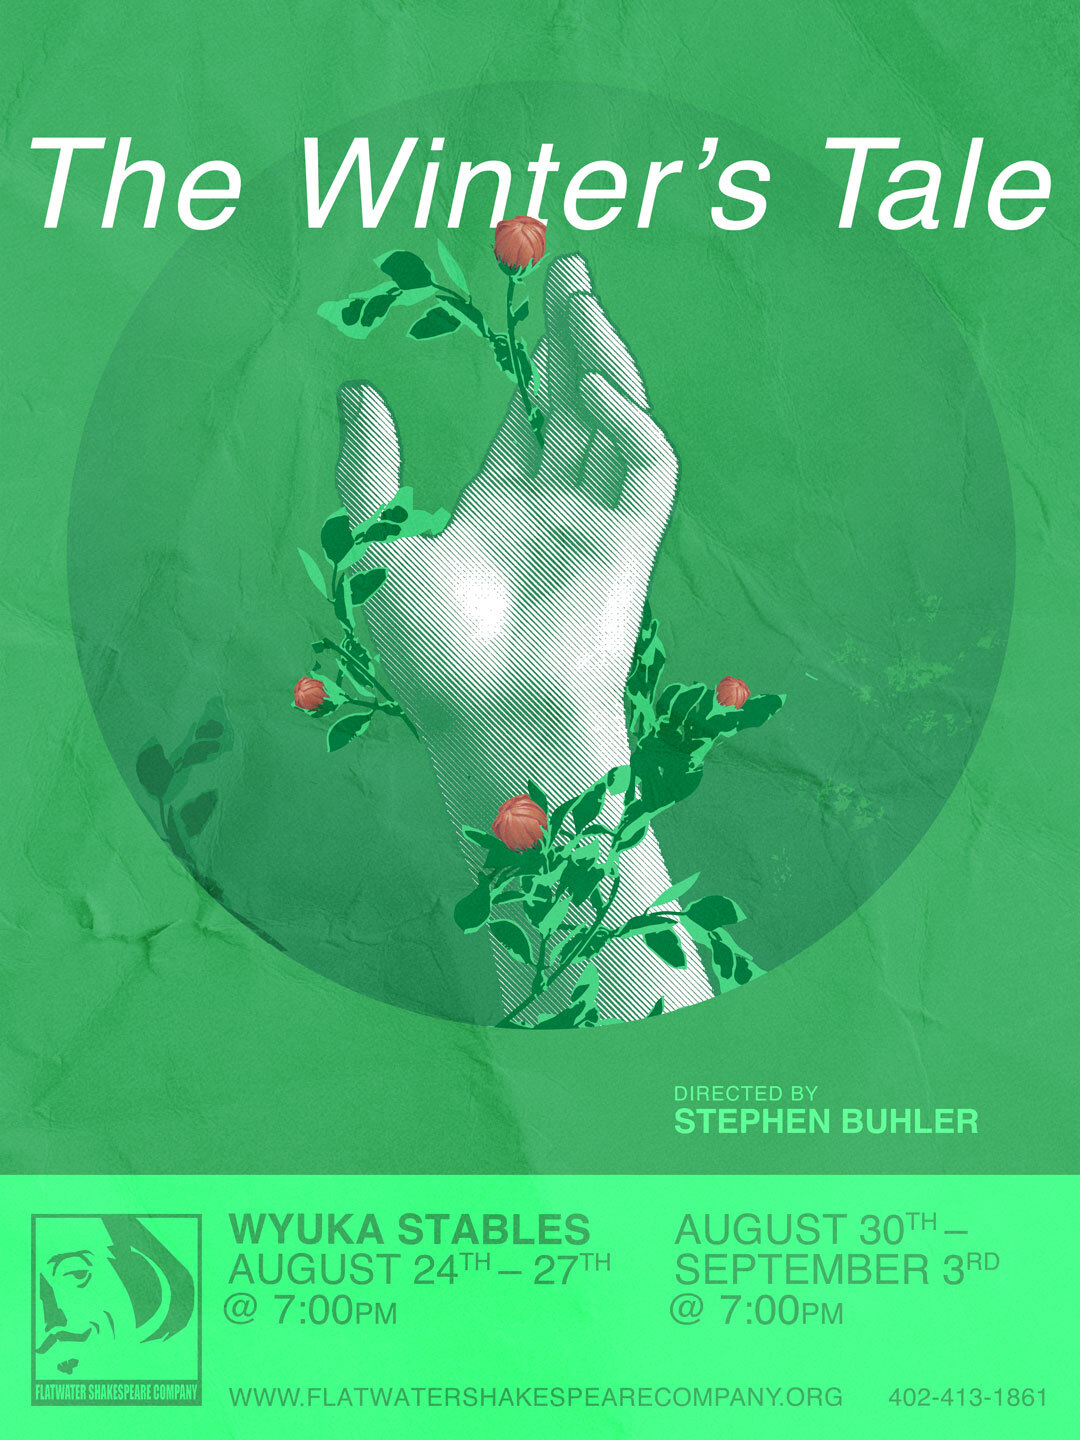 9/2 STU - STUDENT: Sat. September 2, 2023 | 7:00 p.m. - 10:00 p.m. CST | Wyuka Stables (The Winter's Tale)